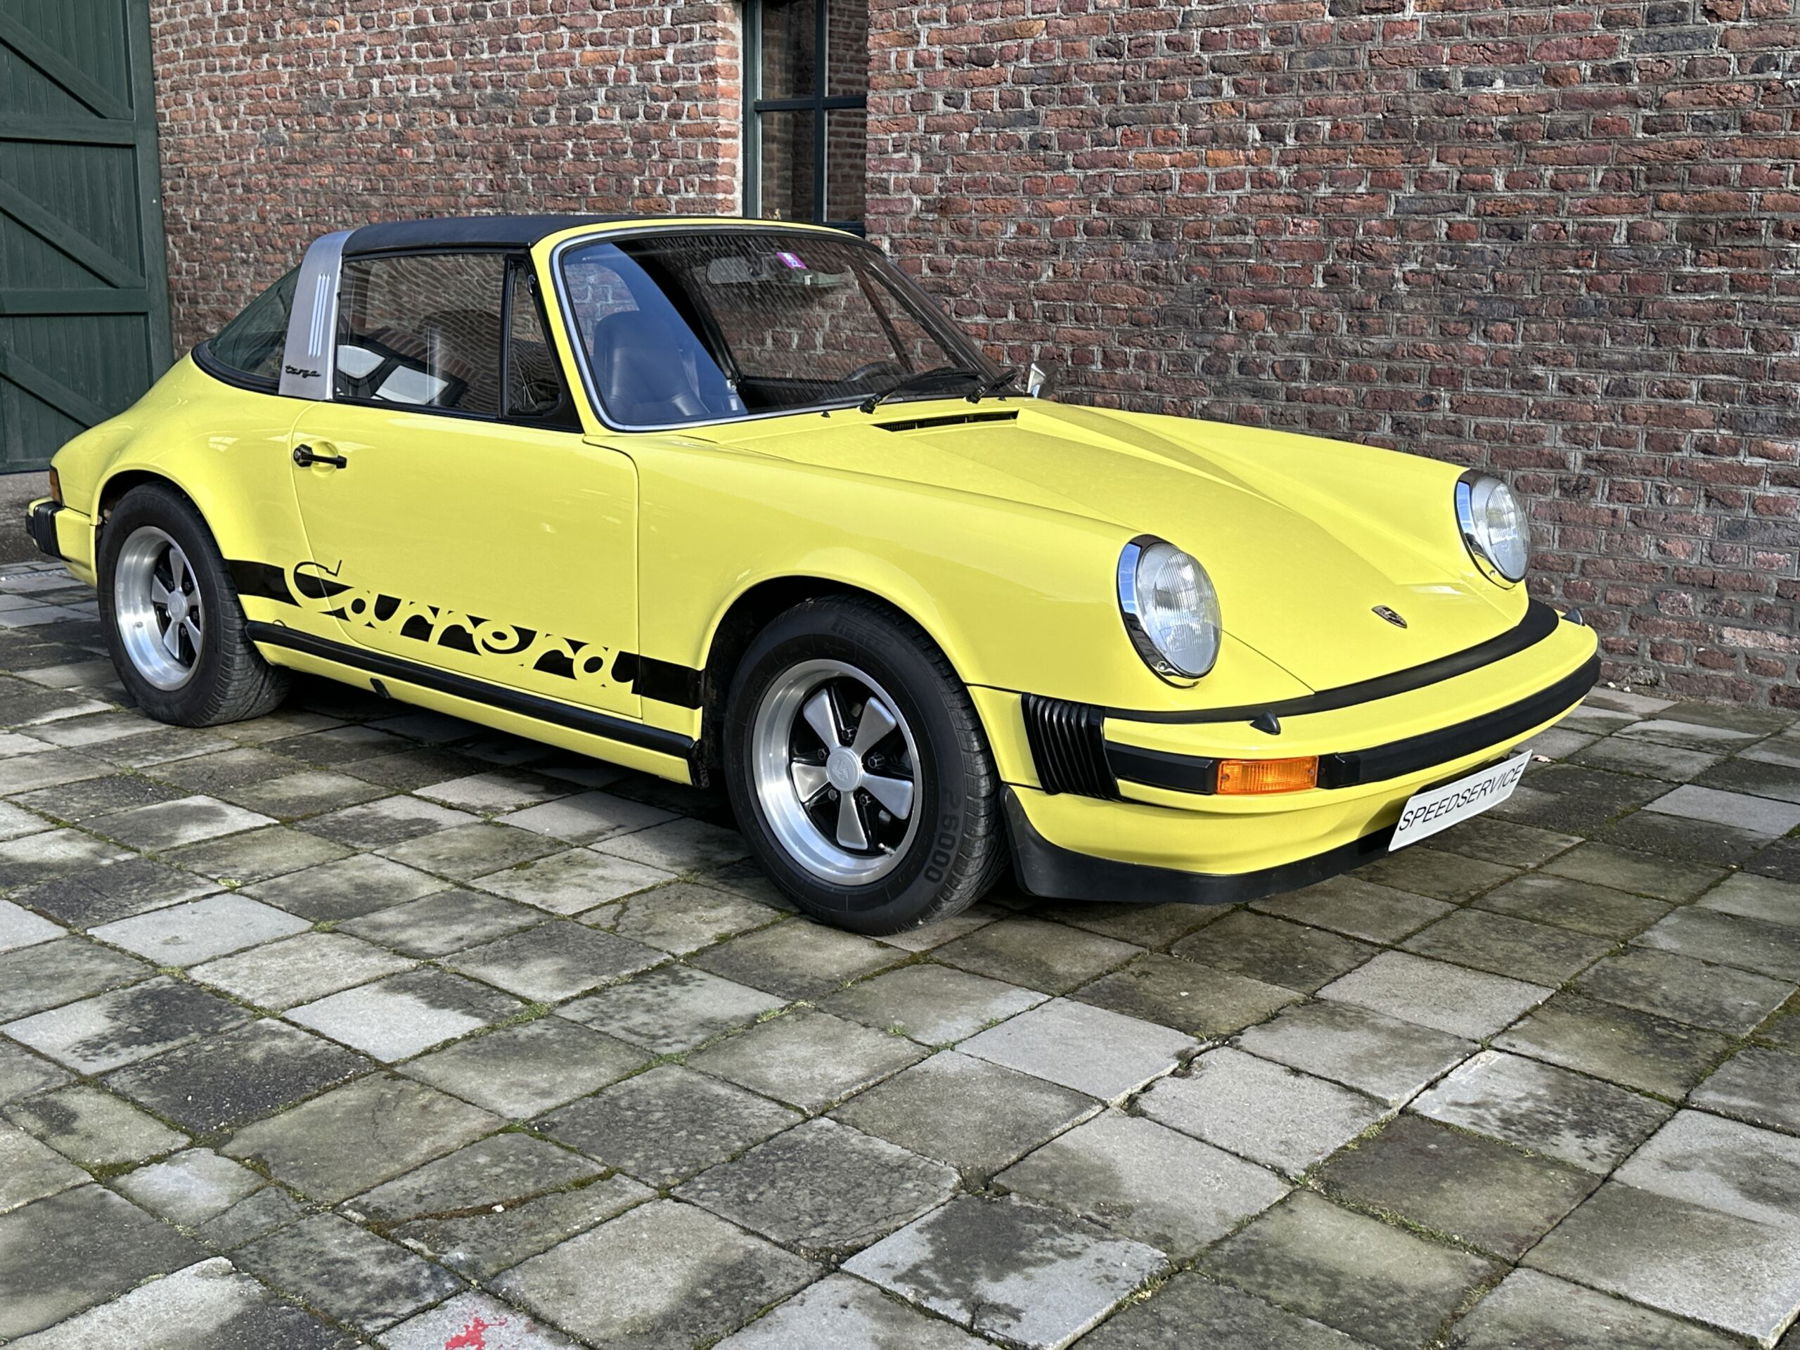 Porsche 911 Yellow for sale - Elferspot - Marketplace for used Porsche